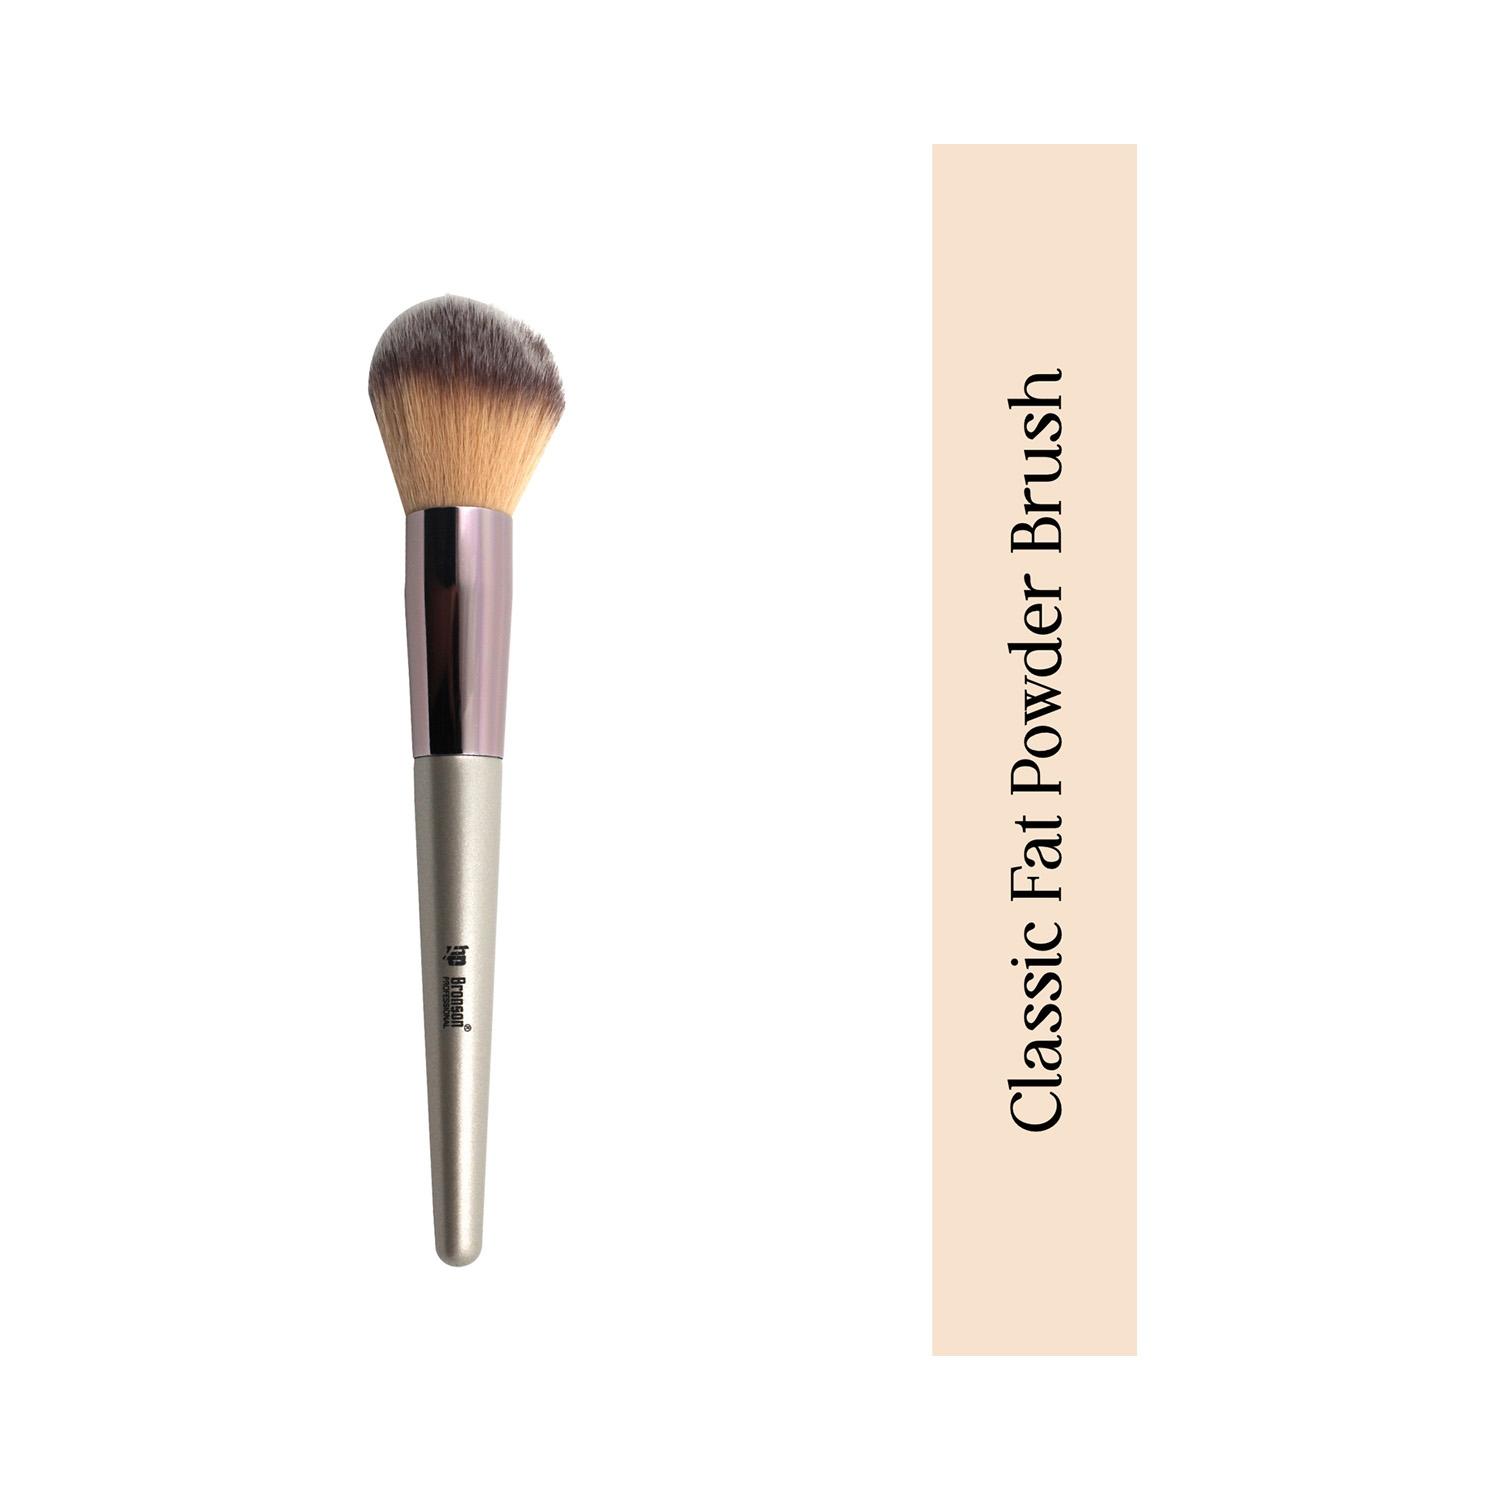 bronson professional classic fat powder makeup brush - silver, pink